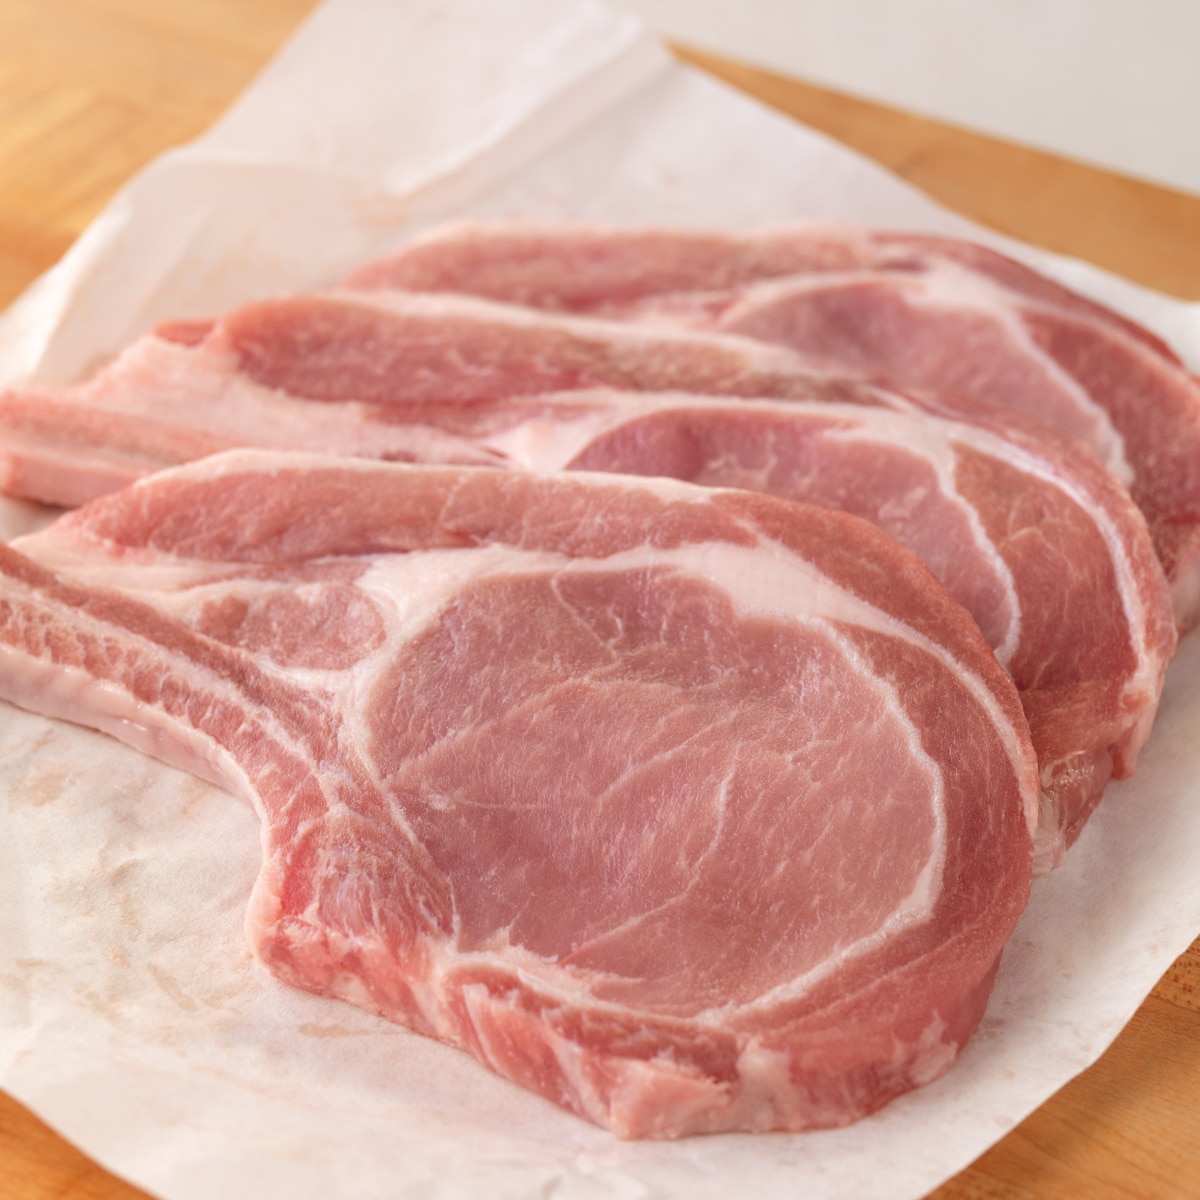 Raw bone-in pork chops ready for pan frying.